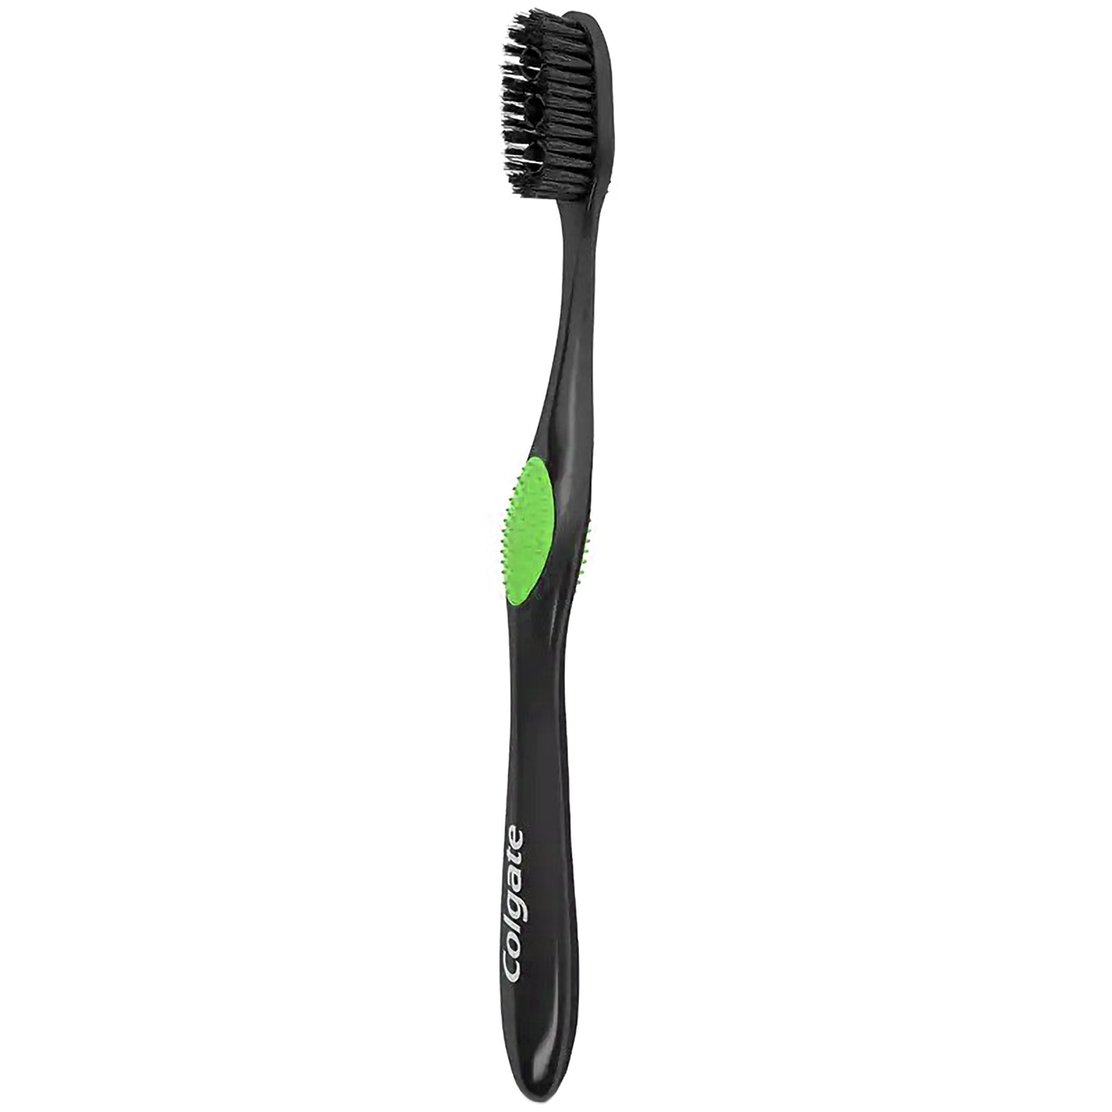 Colgate 360 Charcoal Toothbrush Medium Μέτρια Οδοντόβουρτσα με Ίνες Εμπλουτισμένες με Άνθρακα, για Βαθύ Καθαρισμό 1 Τεμάχιο – Πράσινο